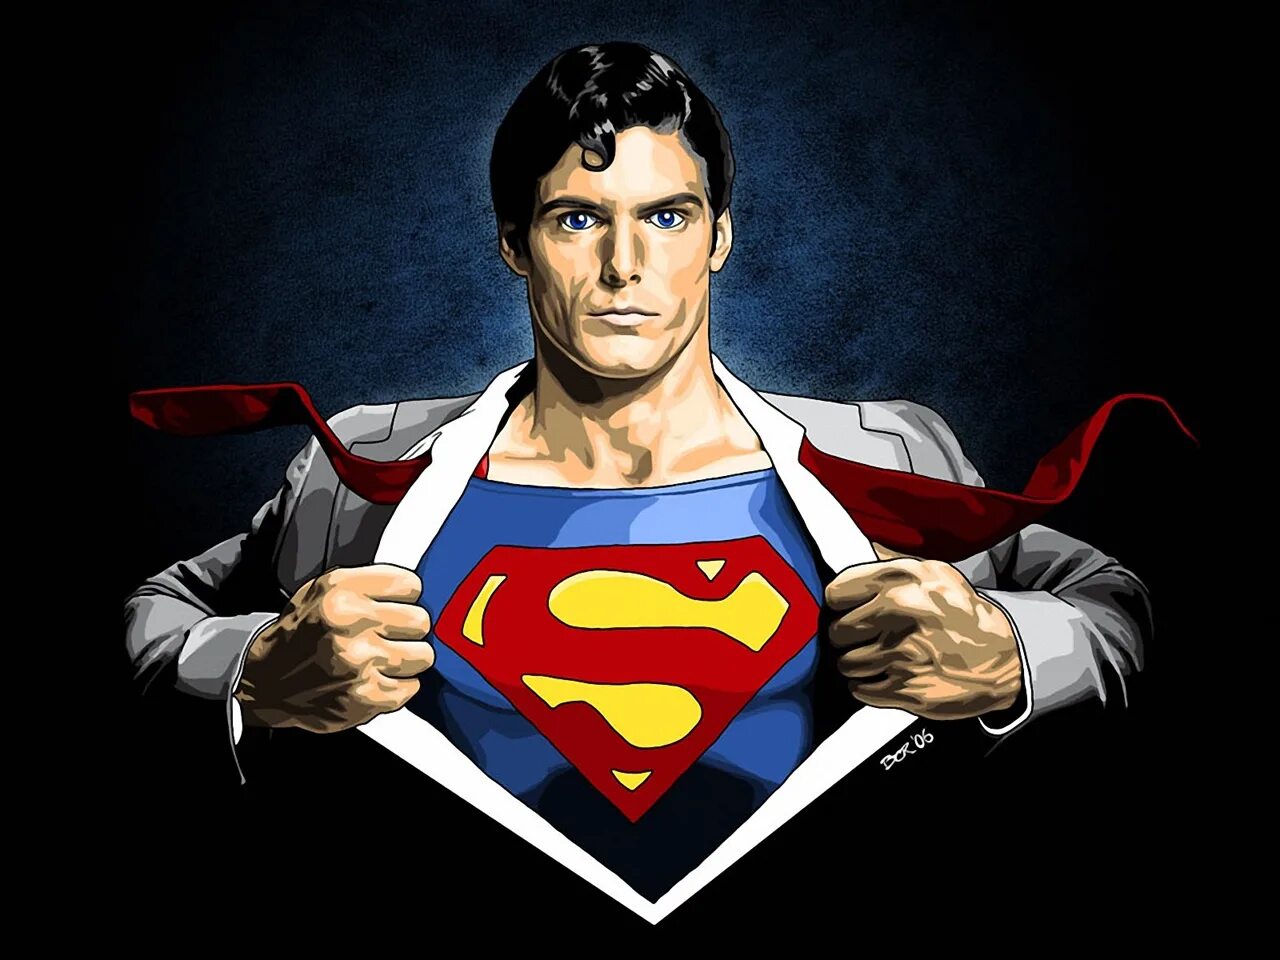 Кларк Кент Супермен. Супермен Кларк Кент арт. Кларк Кент Супермен комикс. Кларк Кент рисунок. Marvel super man